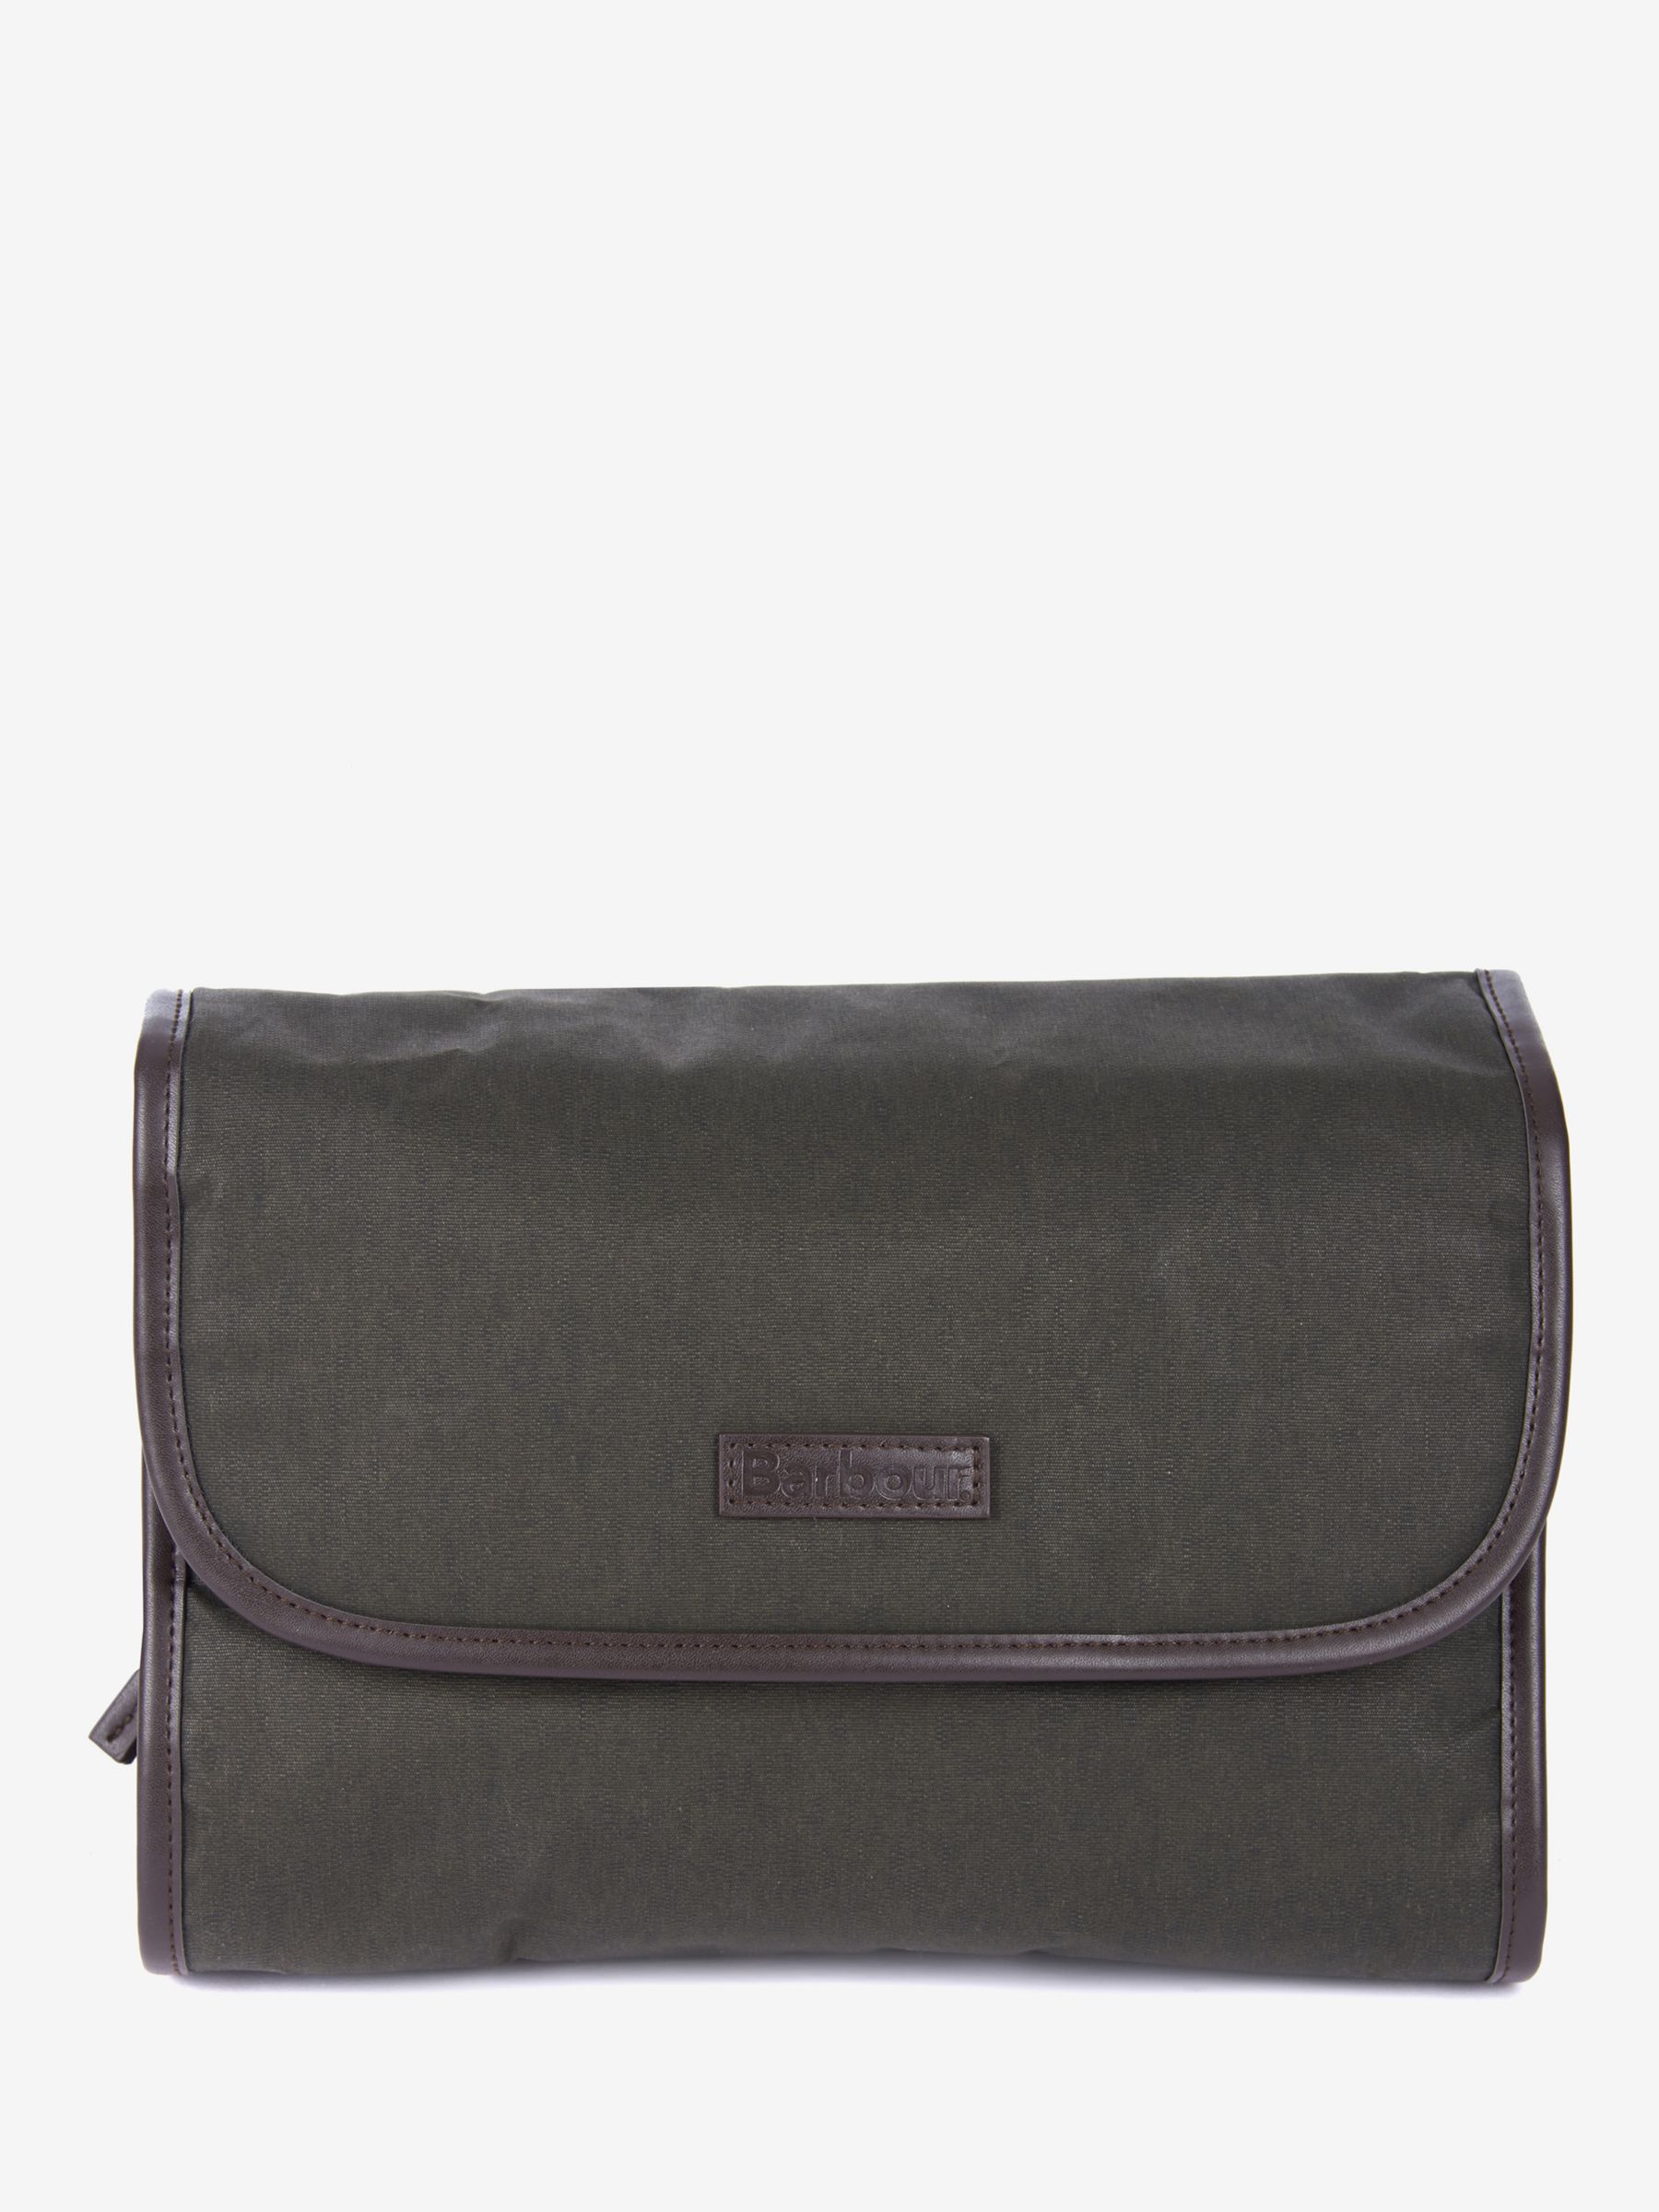 Men's Bags  Briefcase, Messenger, Shoulder, Holdall, Leather Bags